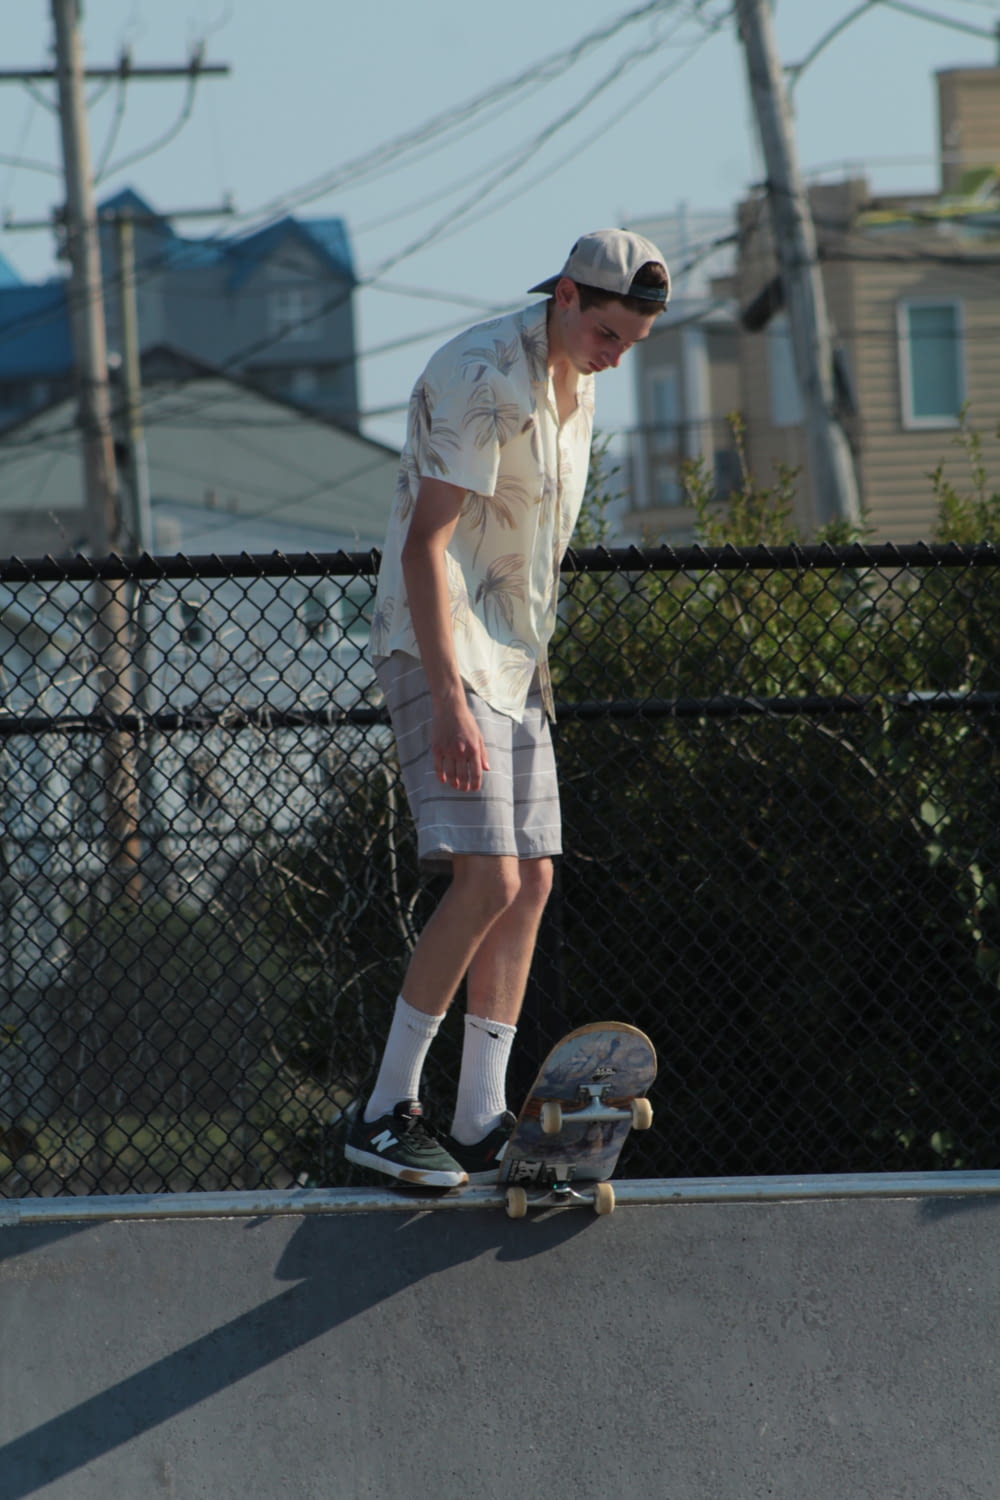 a man skating on a ramp